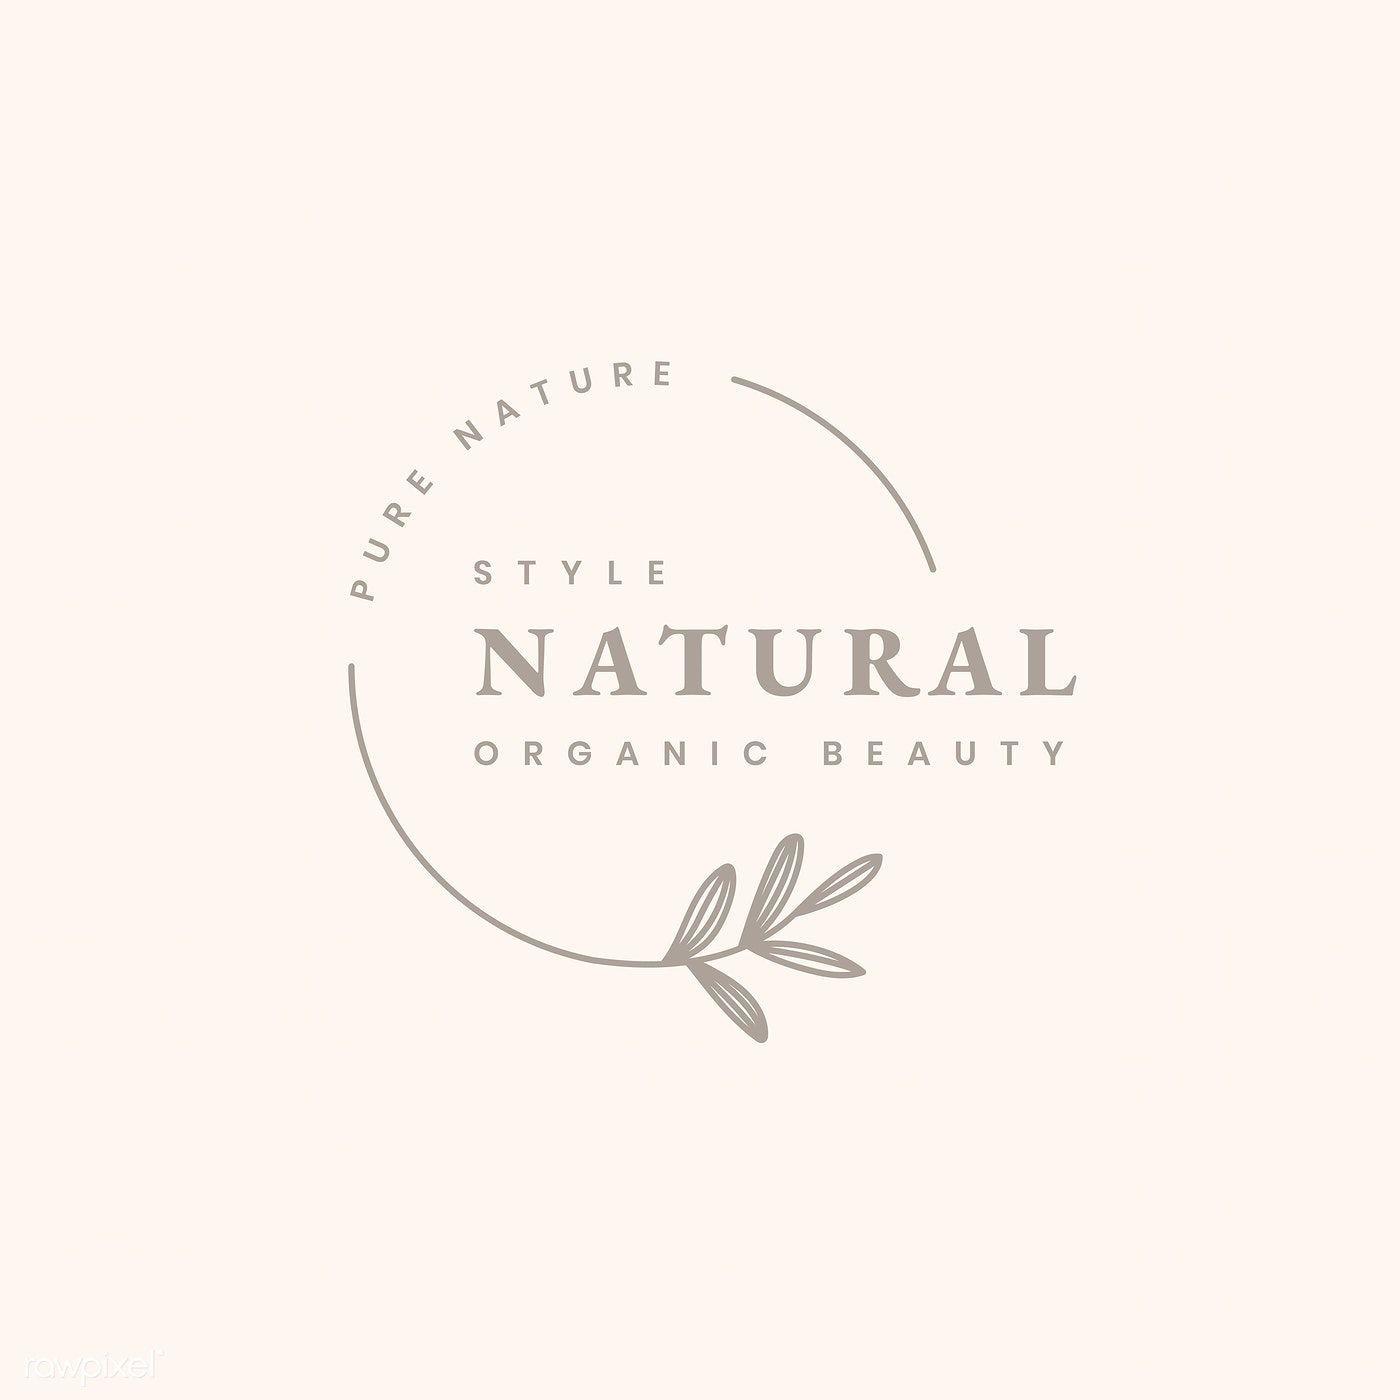 Download free illustration of Organic beauty product logo design vector - Download free illustration of Organic beauty product logo design vector -   13 beauty Logo design ideas